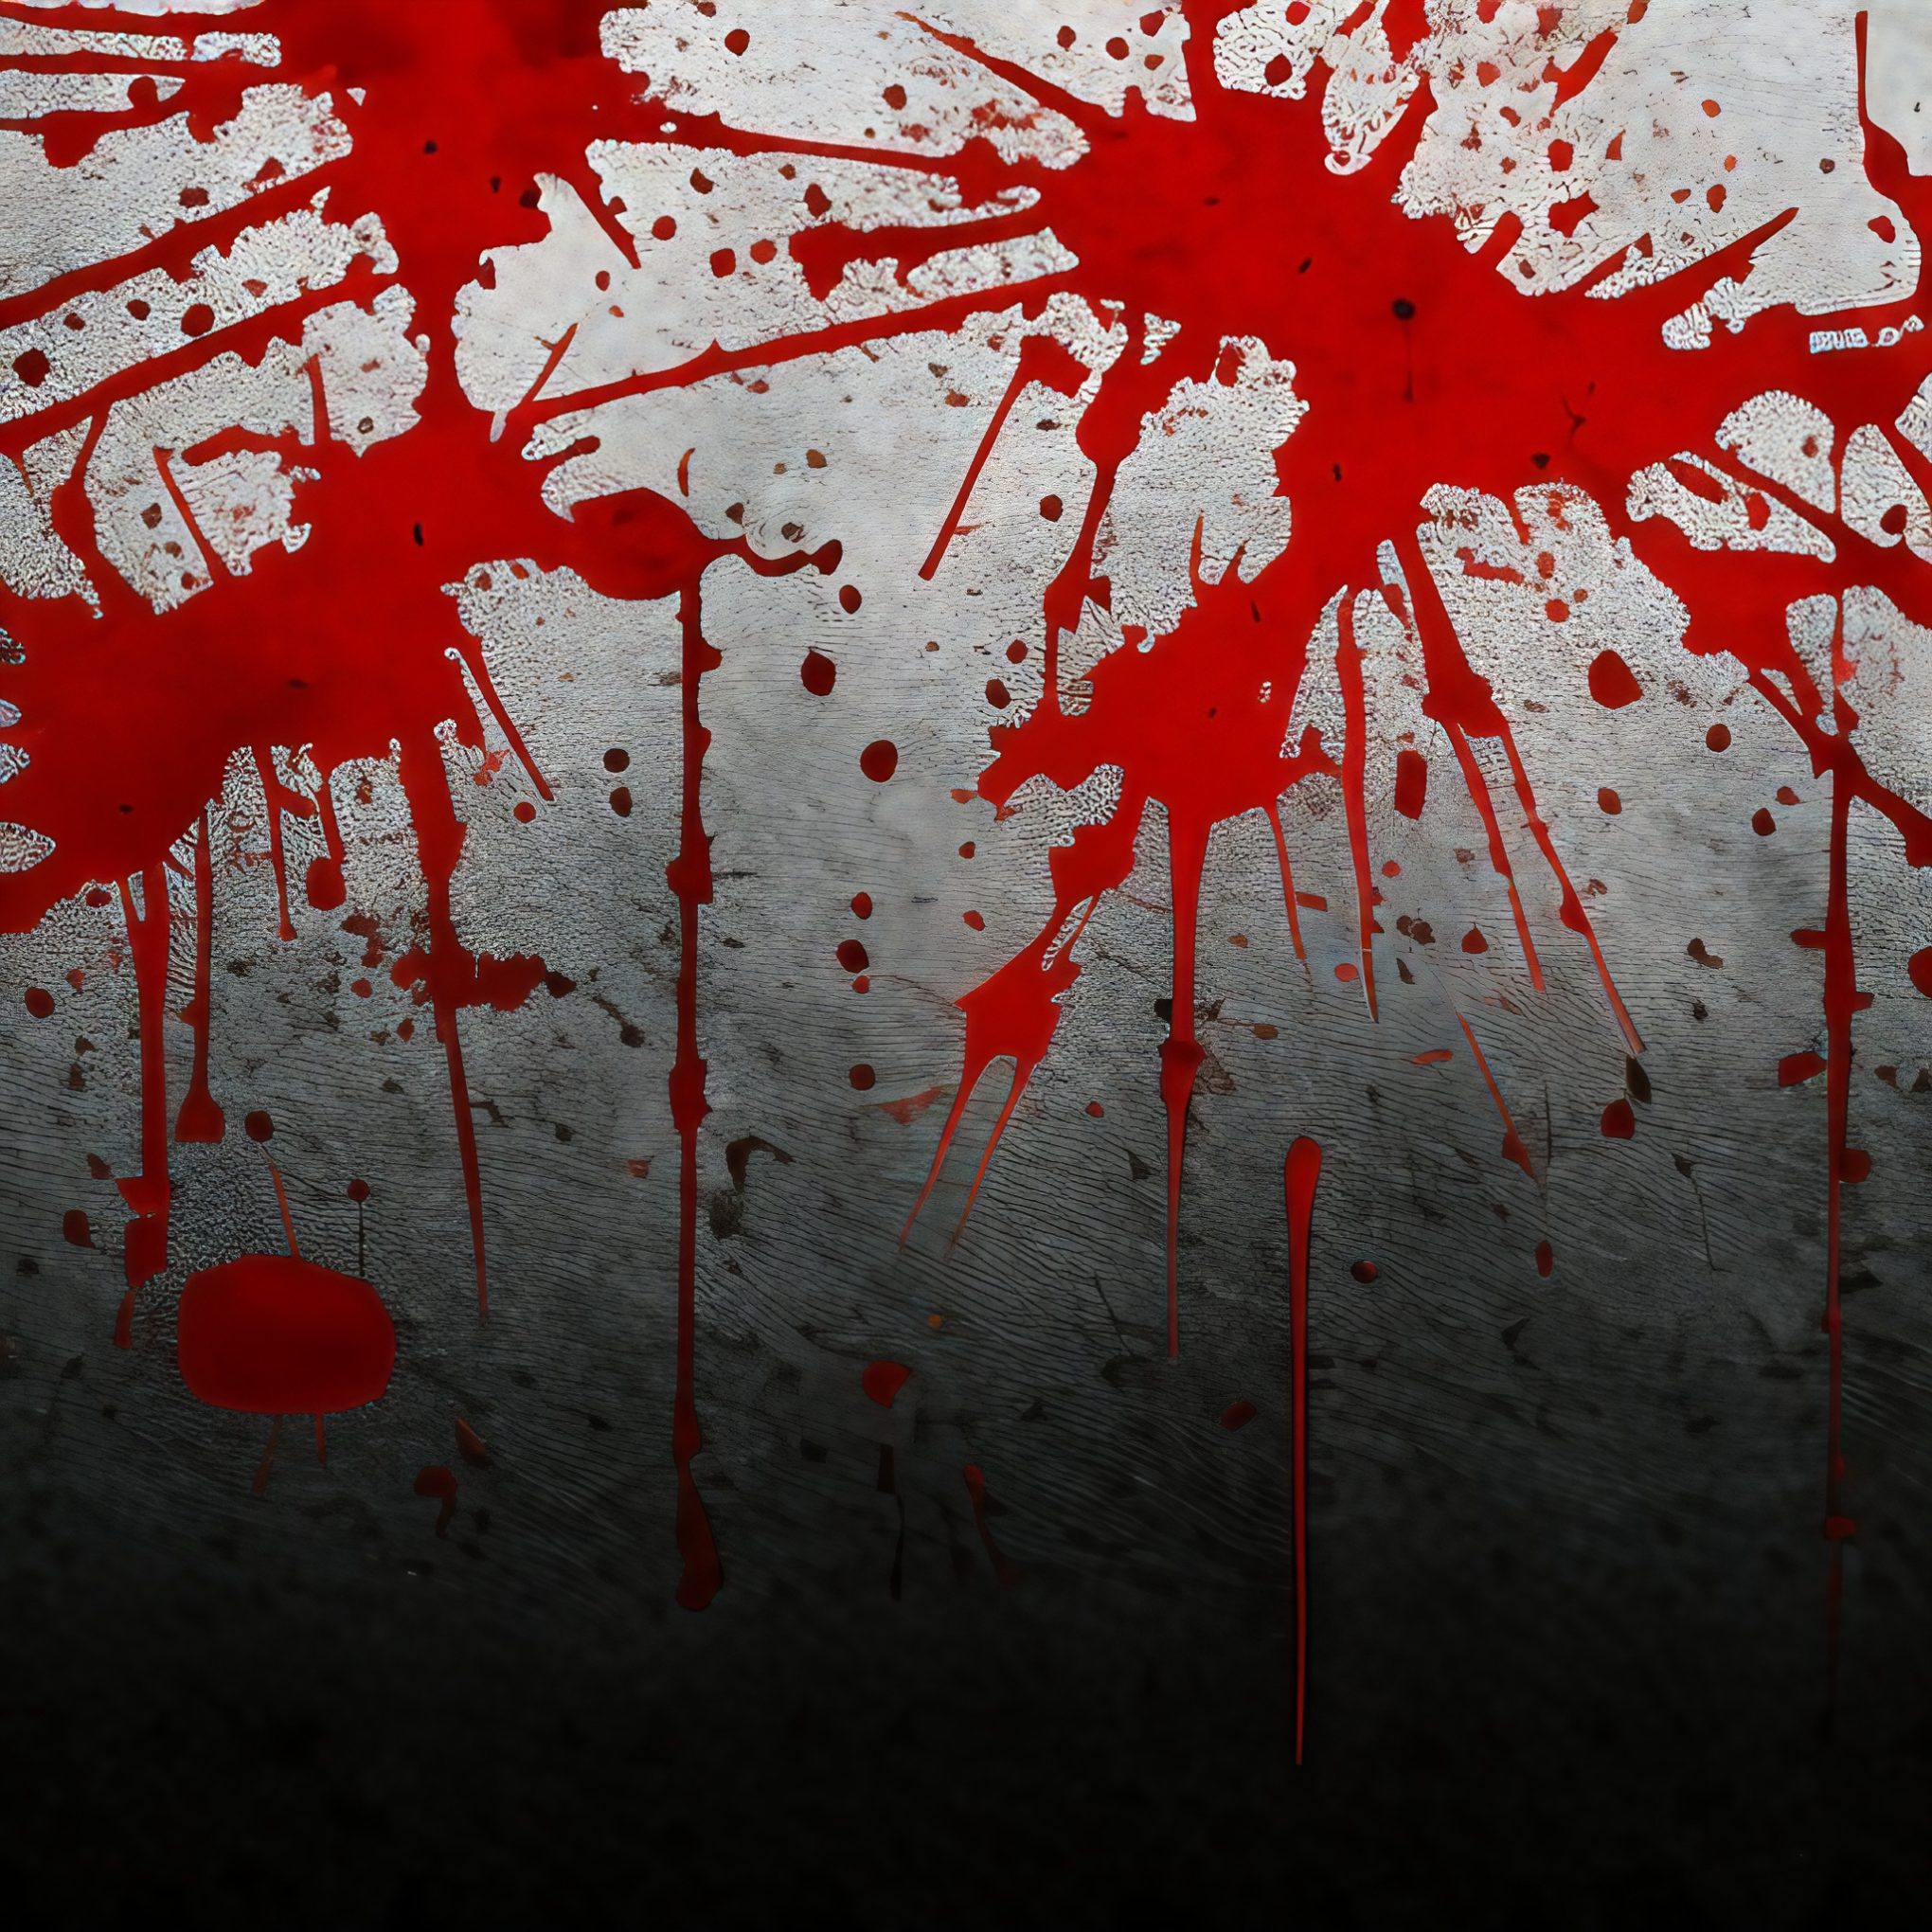 Crime Scene Blood Splatter on Wall Stock Free Image Download